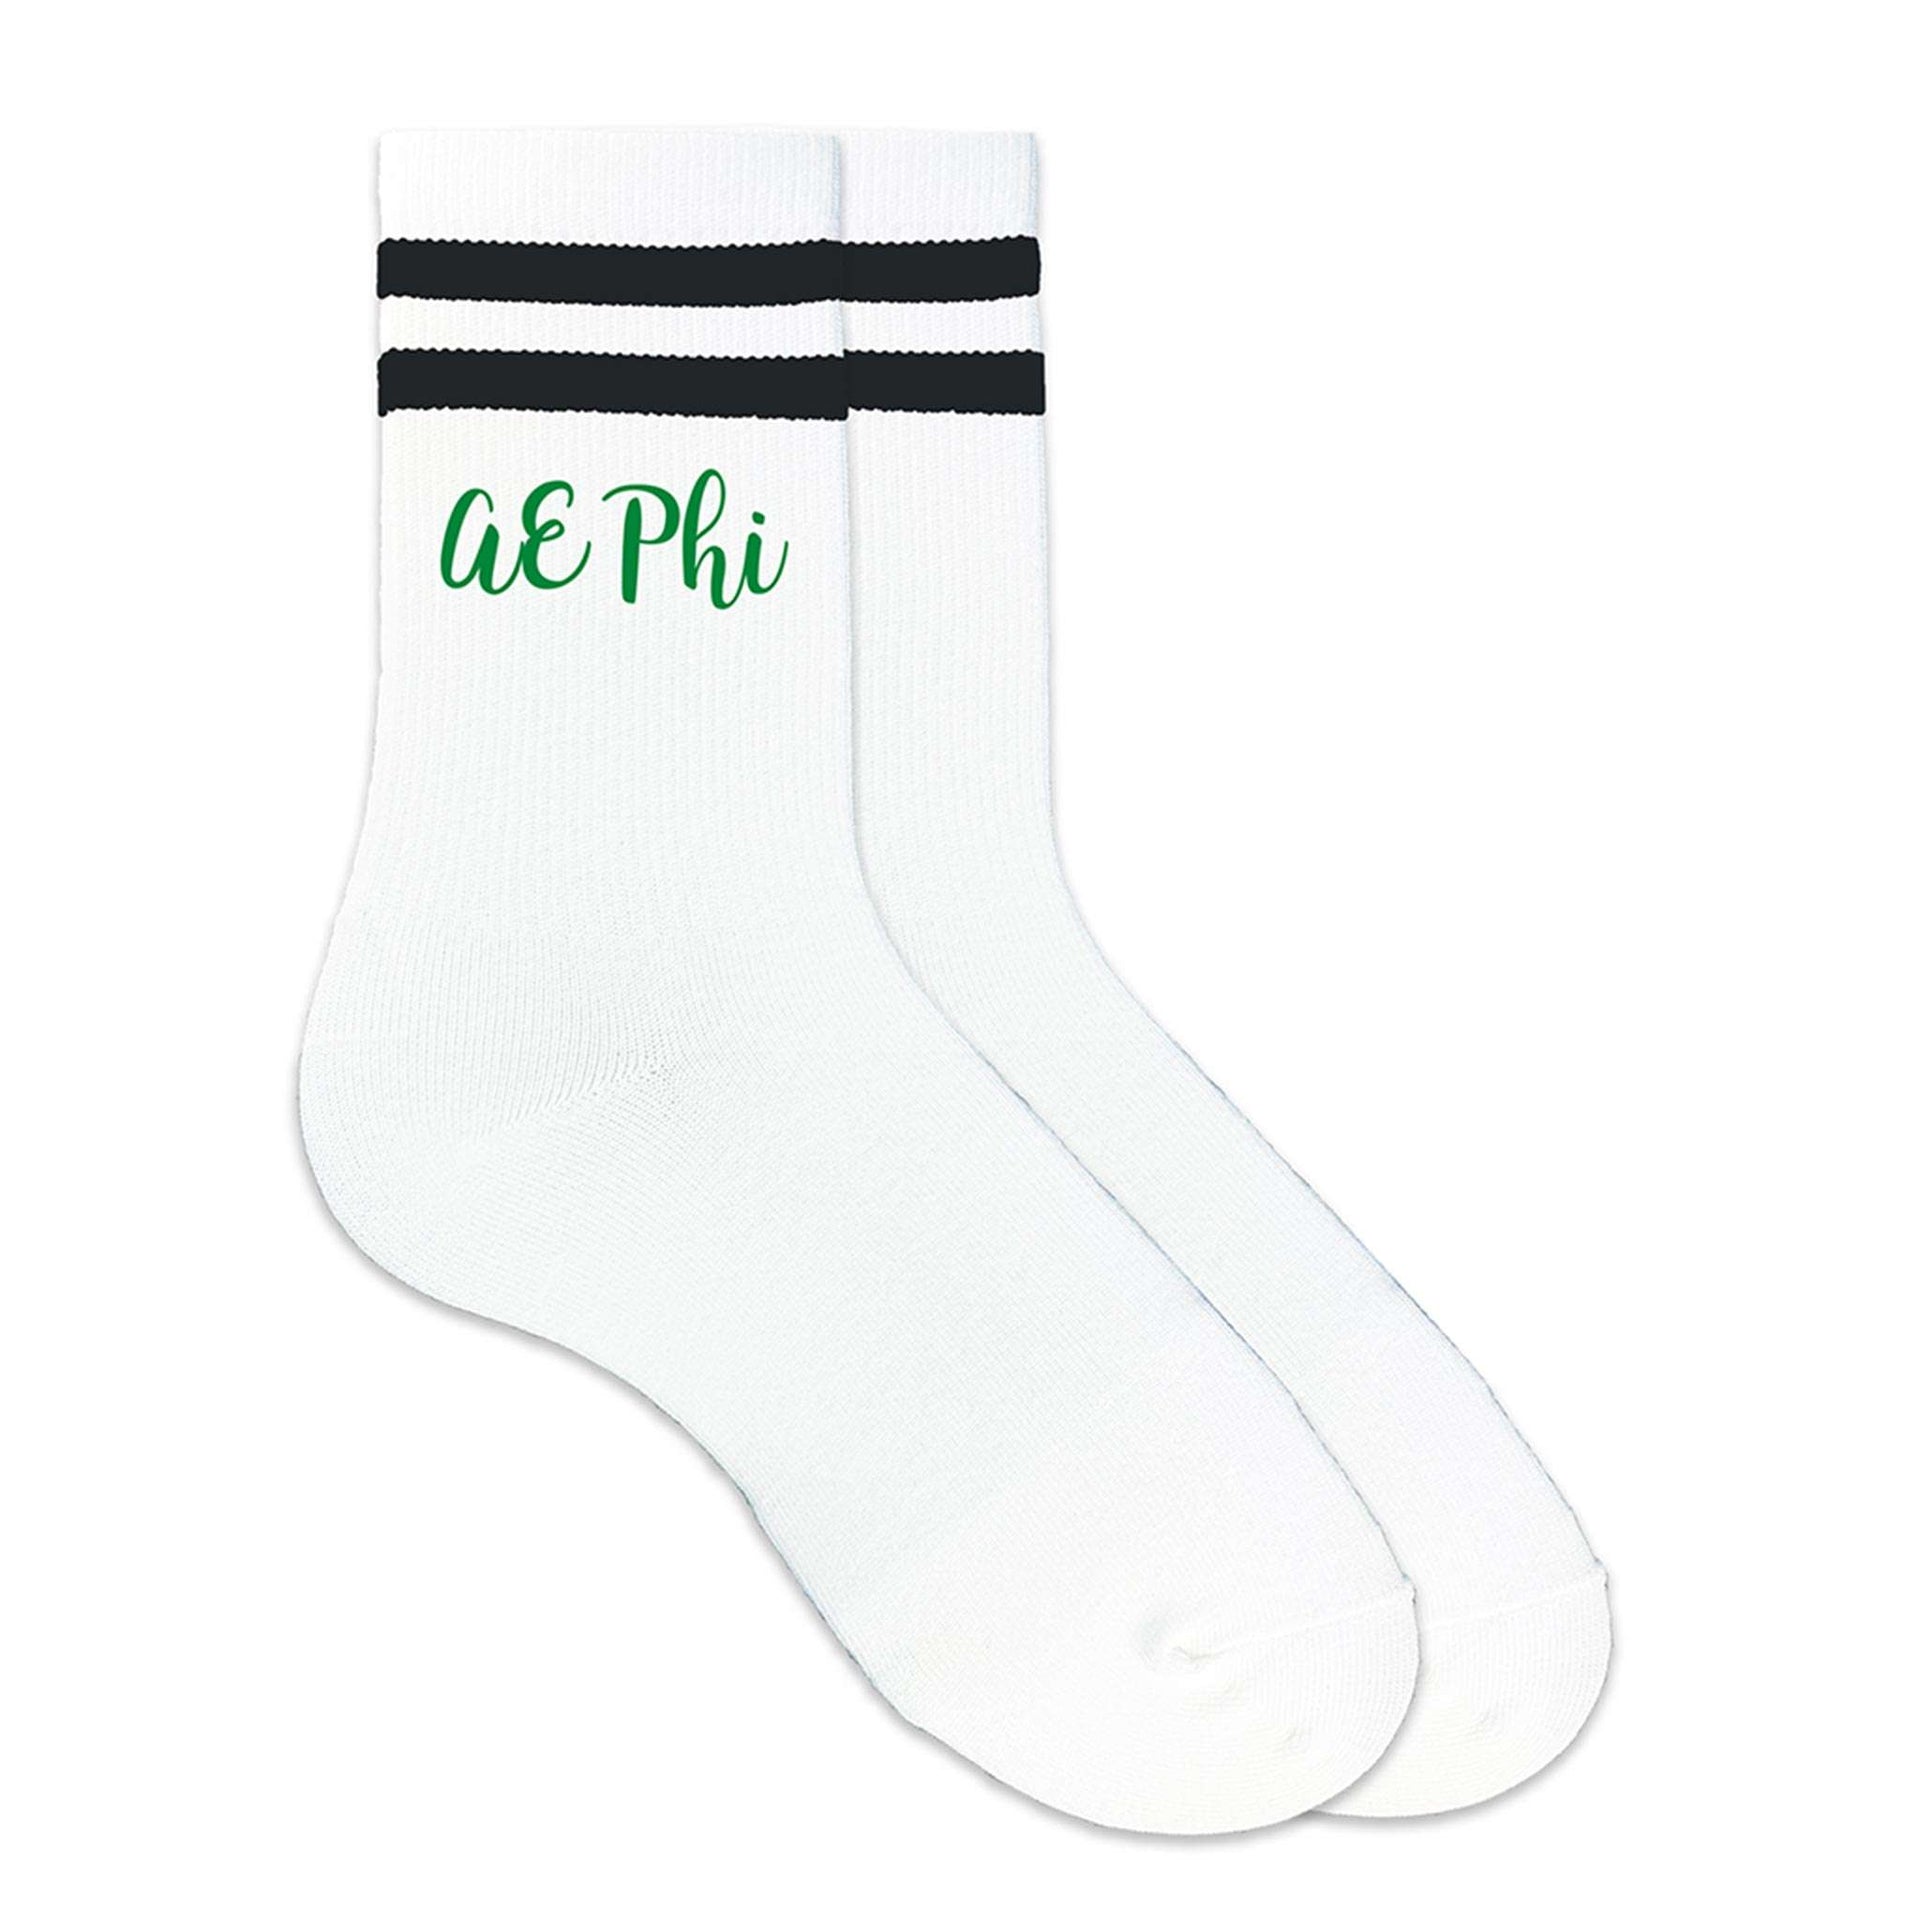 AE Phi sorority nickname digitally printed in sorority colors on striped crew socks.